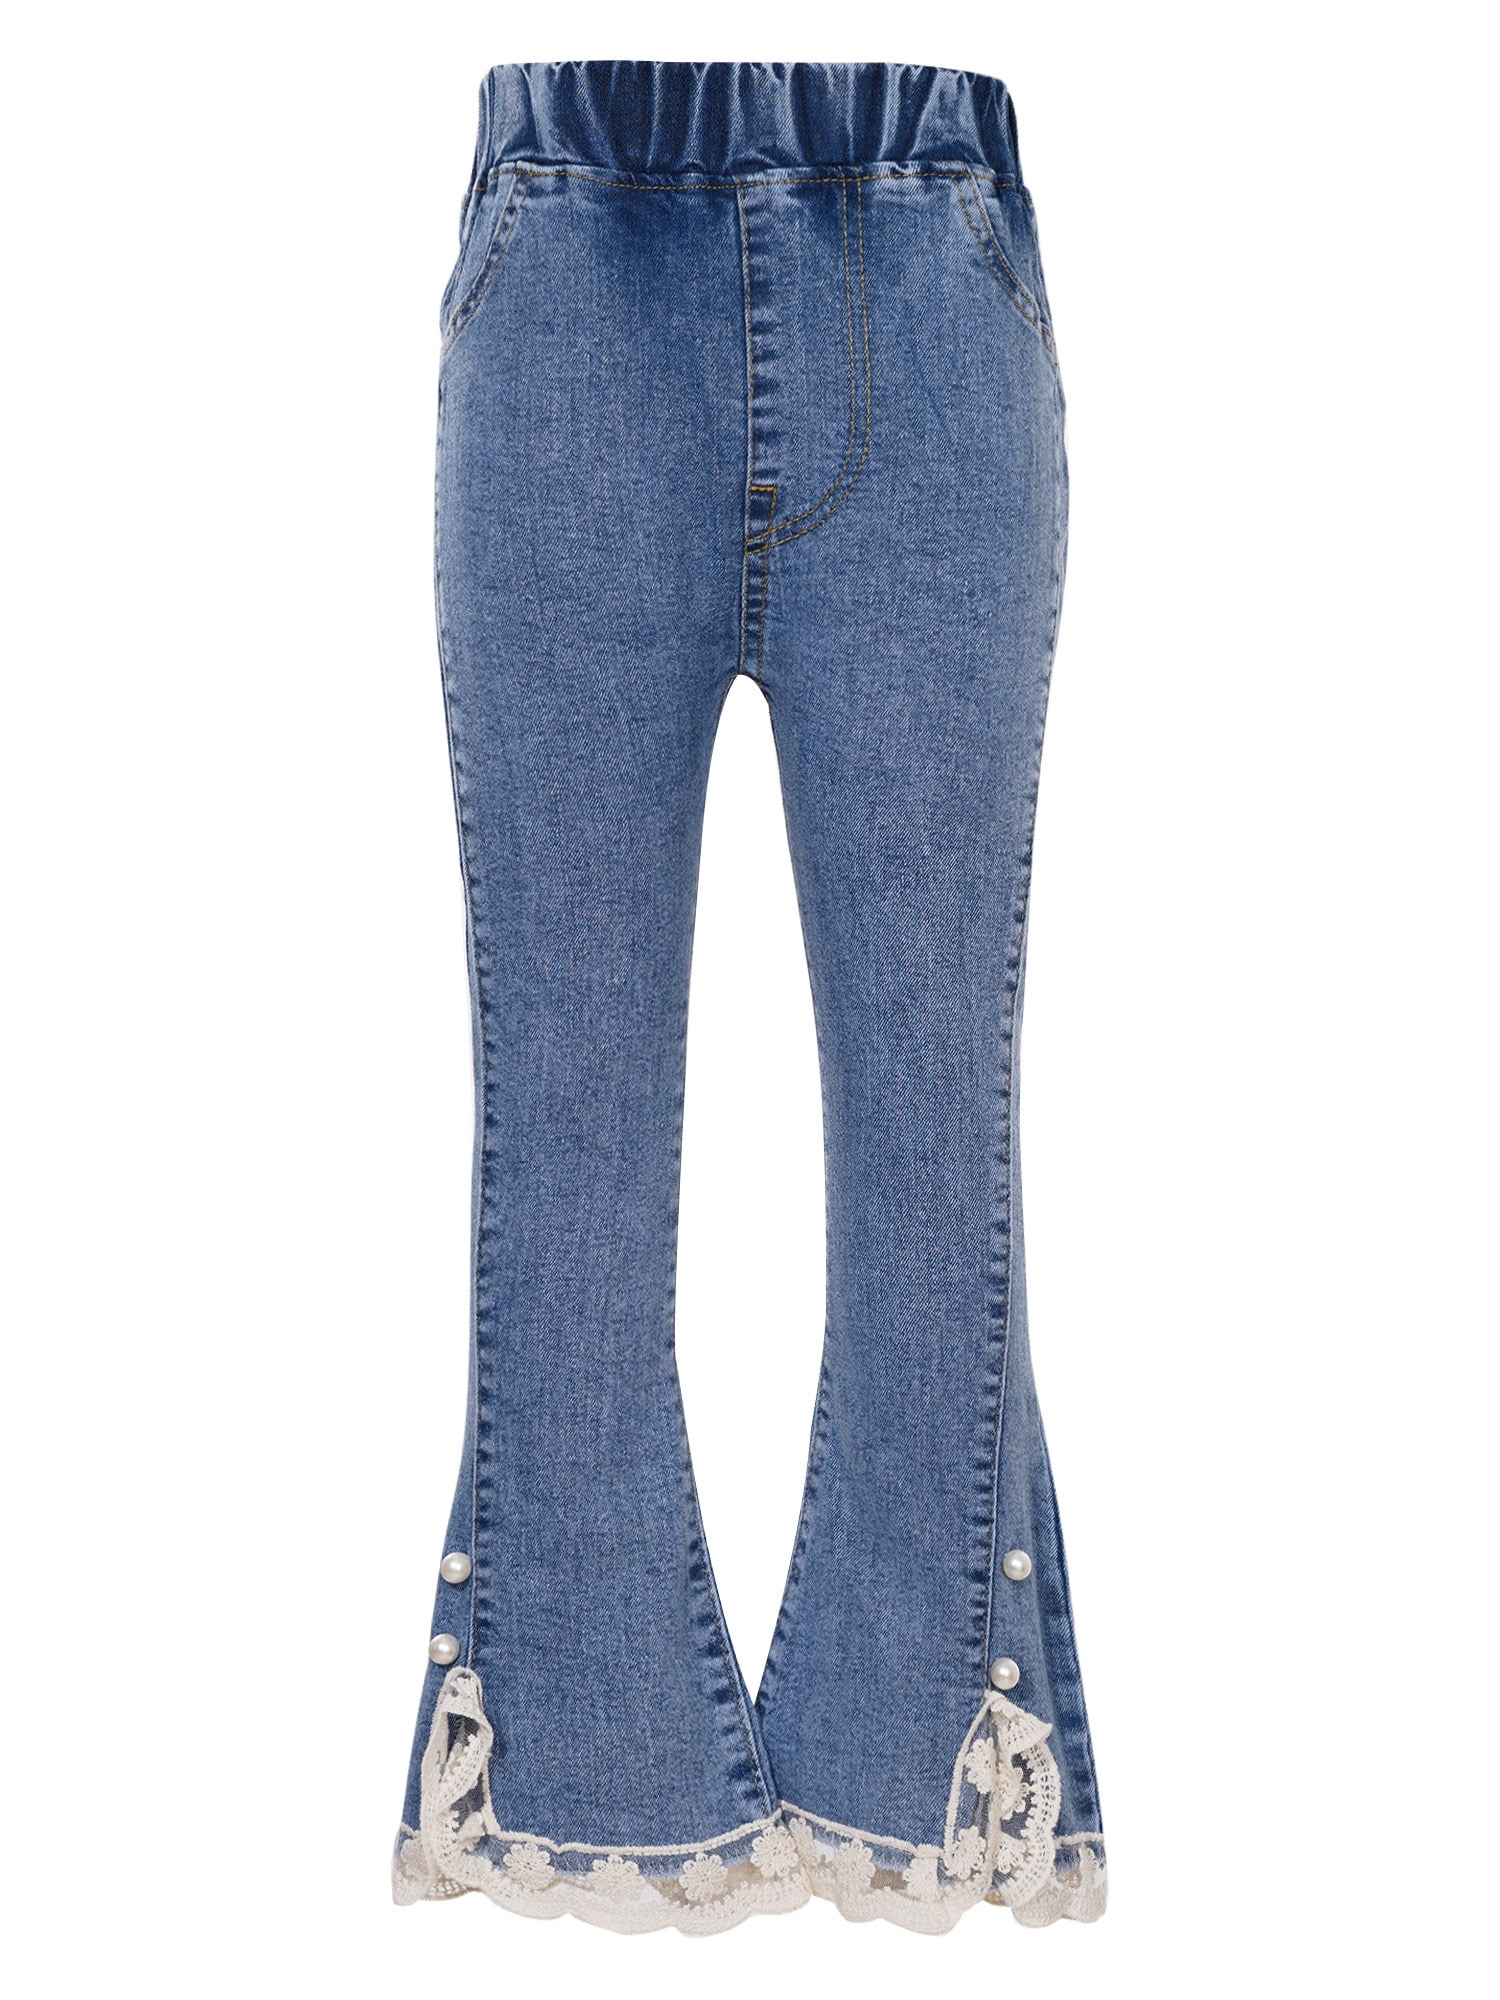 inhzoy Kids Girls Bell Bottom Jeans Lace Hem Flare Denim Pants,Sizes 5 ...